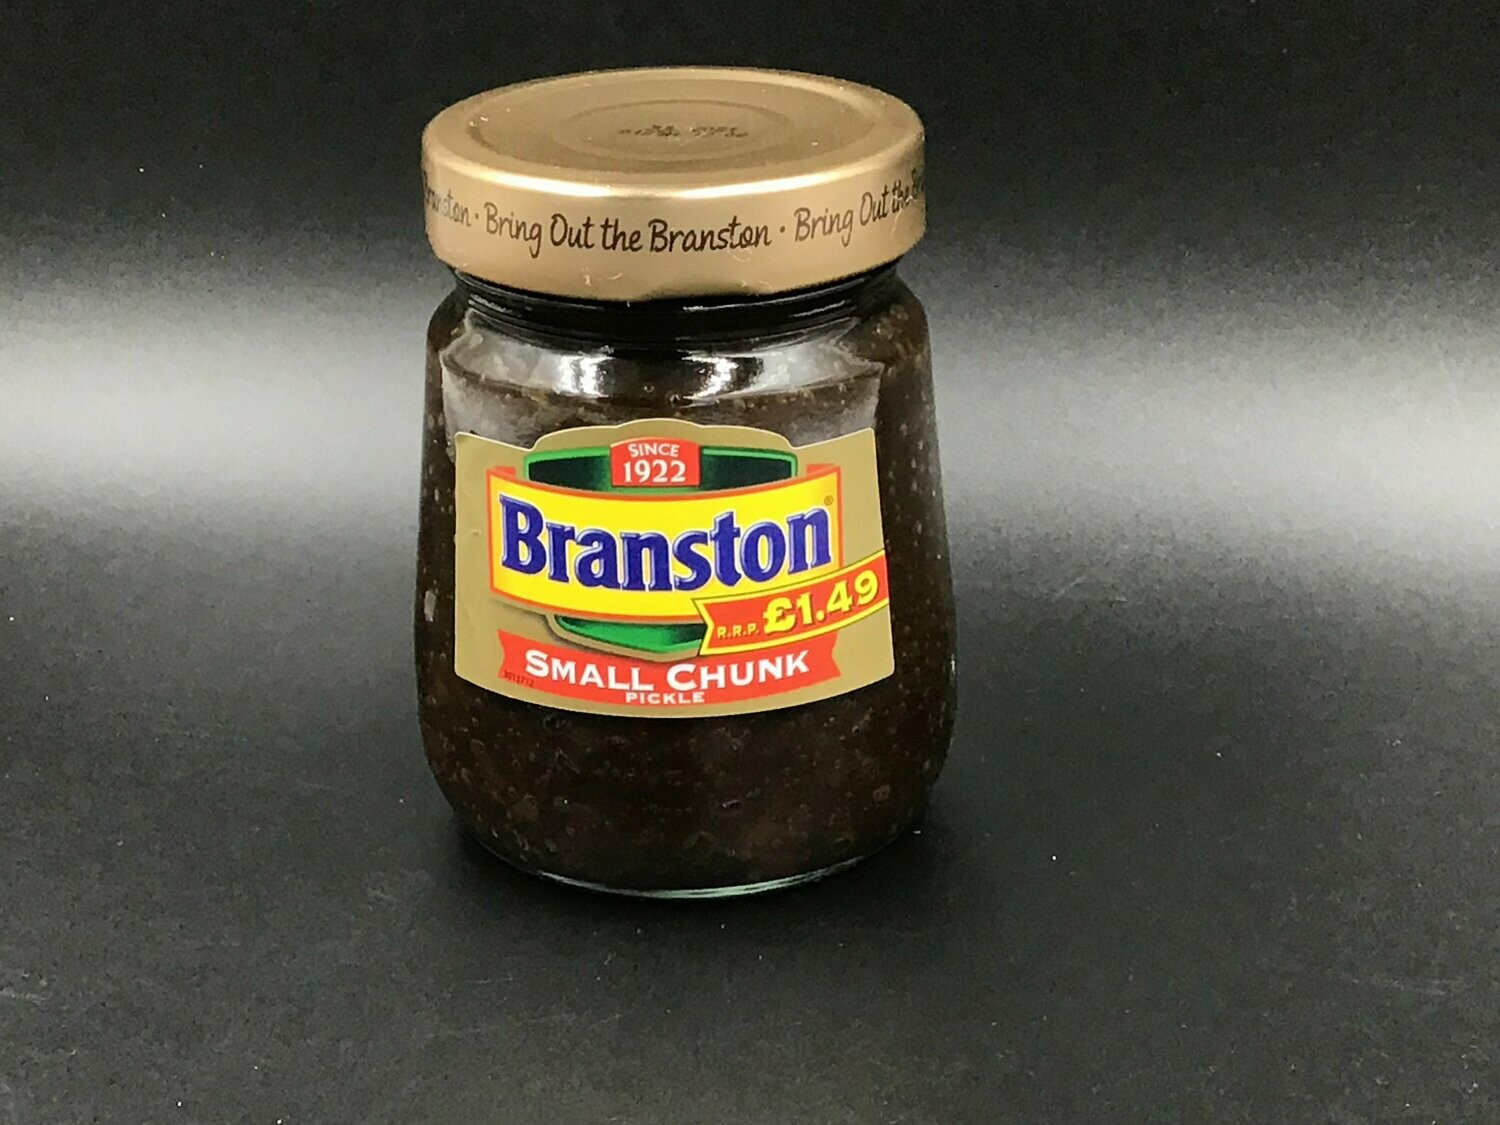 Branston Small Chunk Pickle 360g